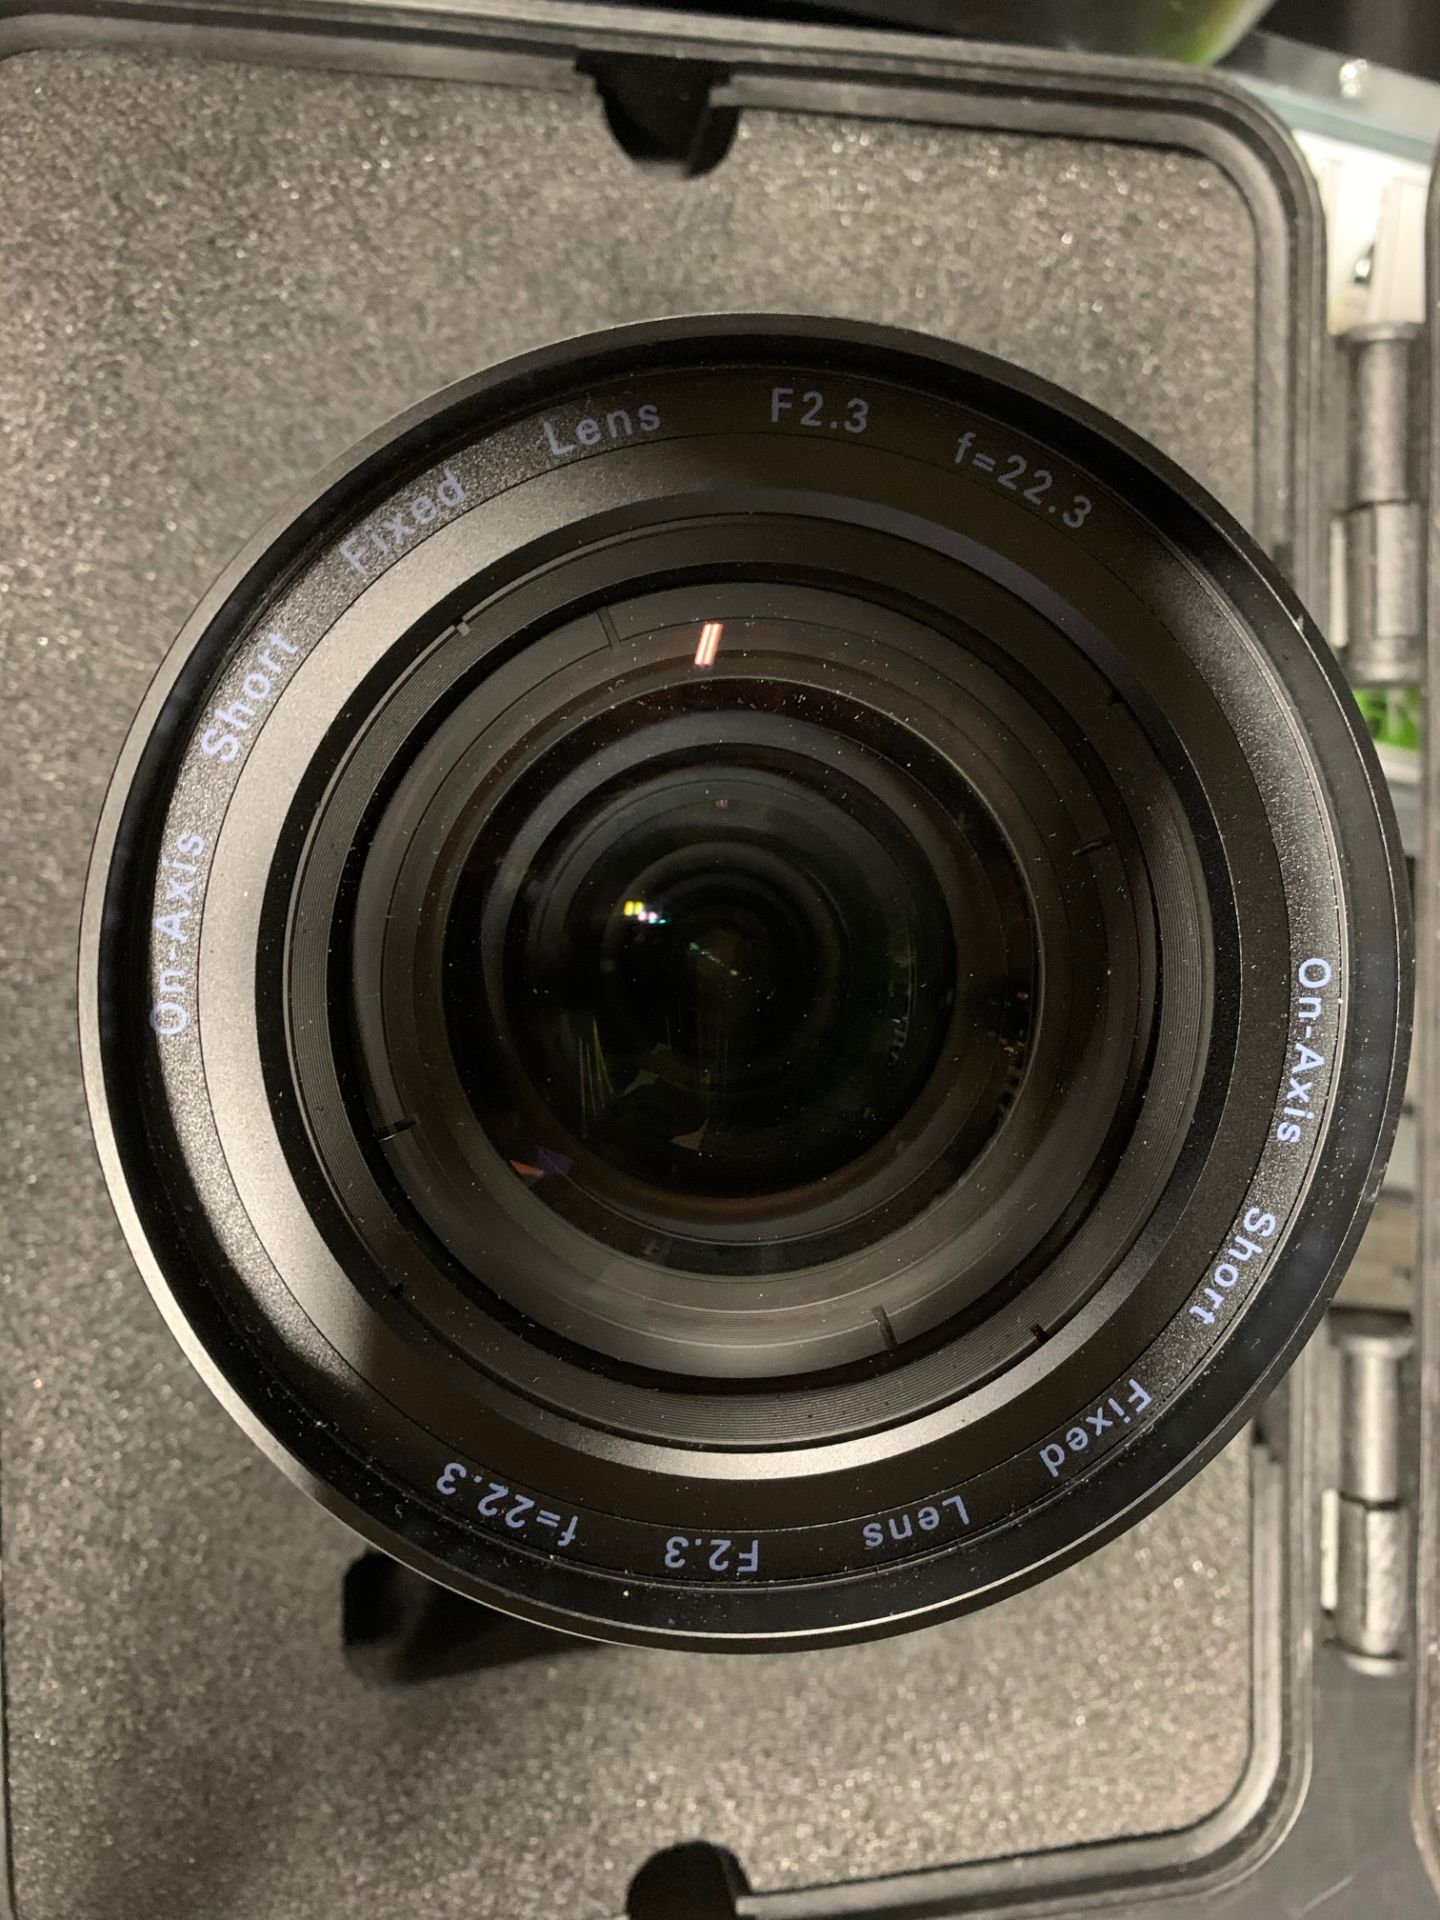 Christie 0.8 Short Throw Lens C/W Explorer Case - Image 2 of 5